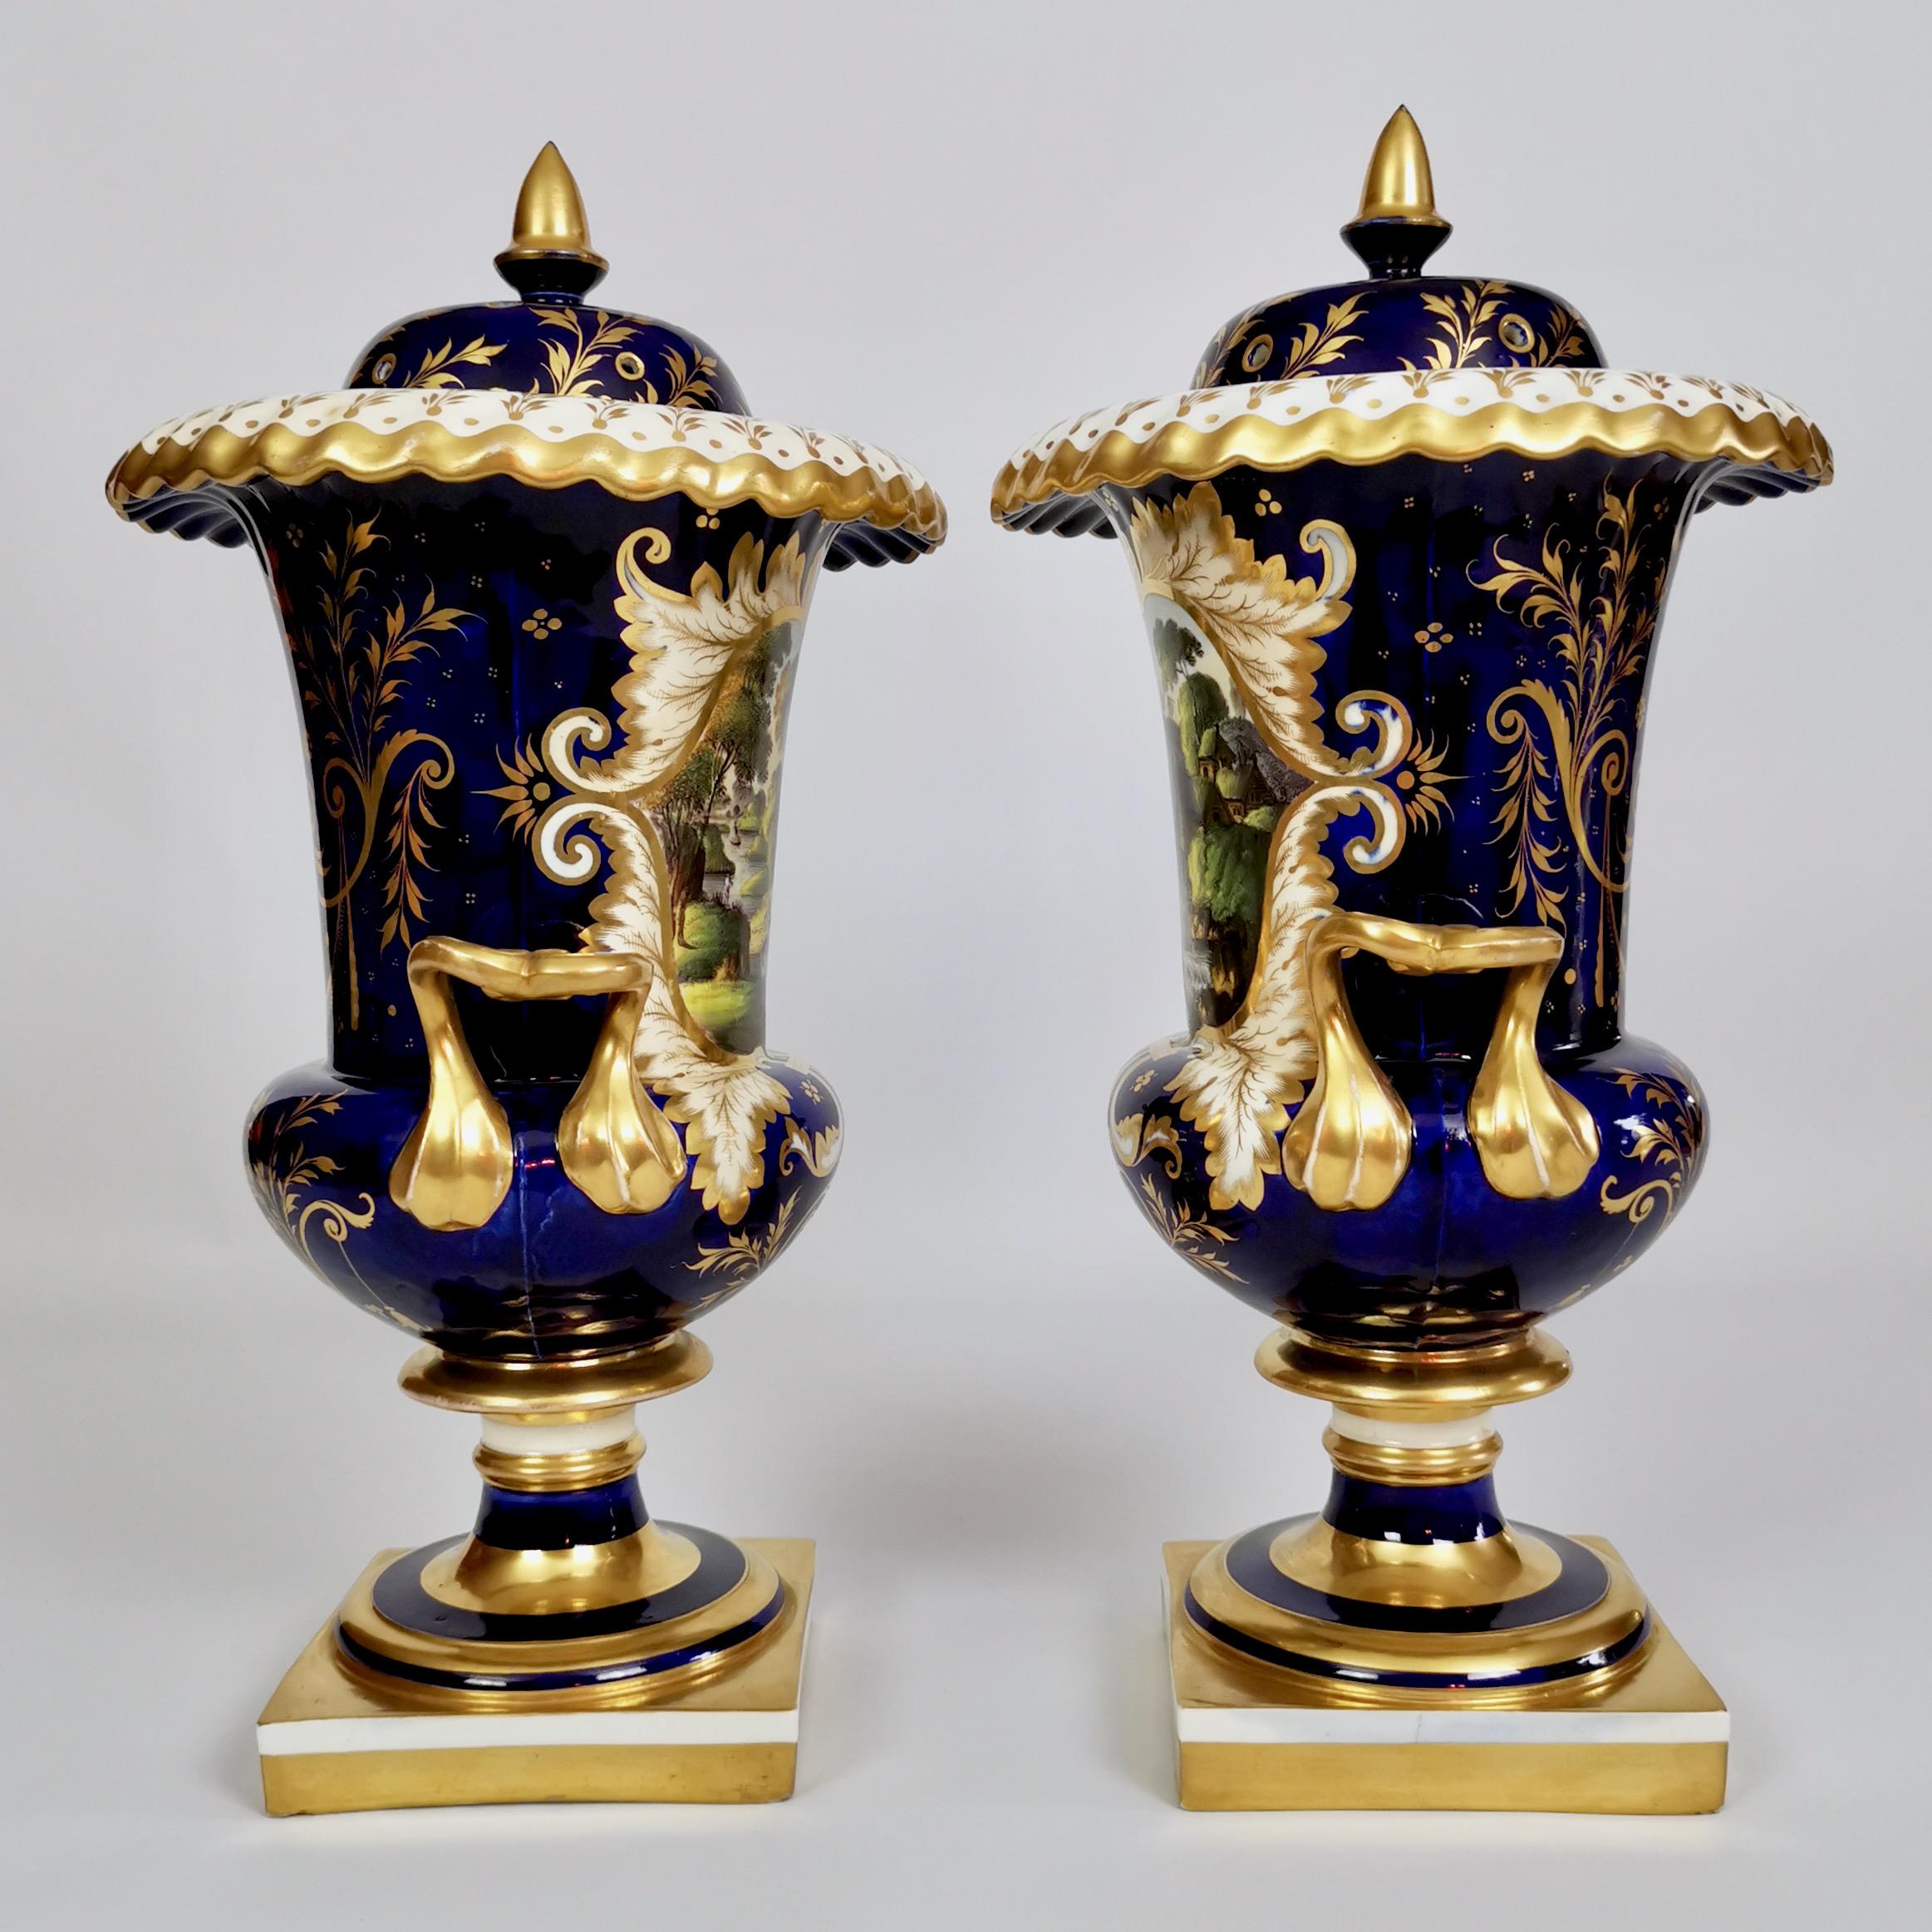 Regency English Pair of Porcelain Potpourri Vases, Cobalt Blue with Landscapes, ca 1830